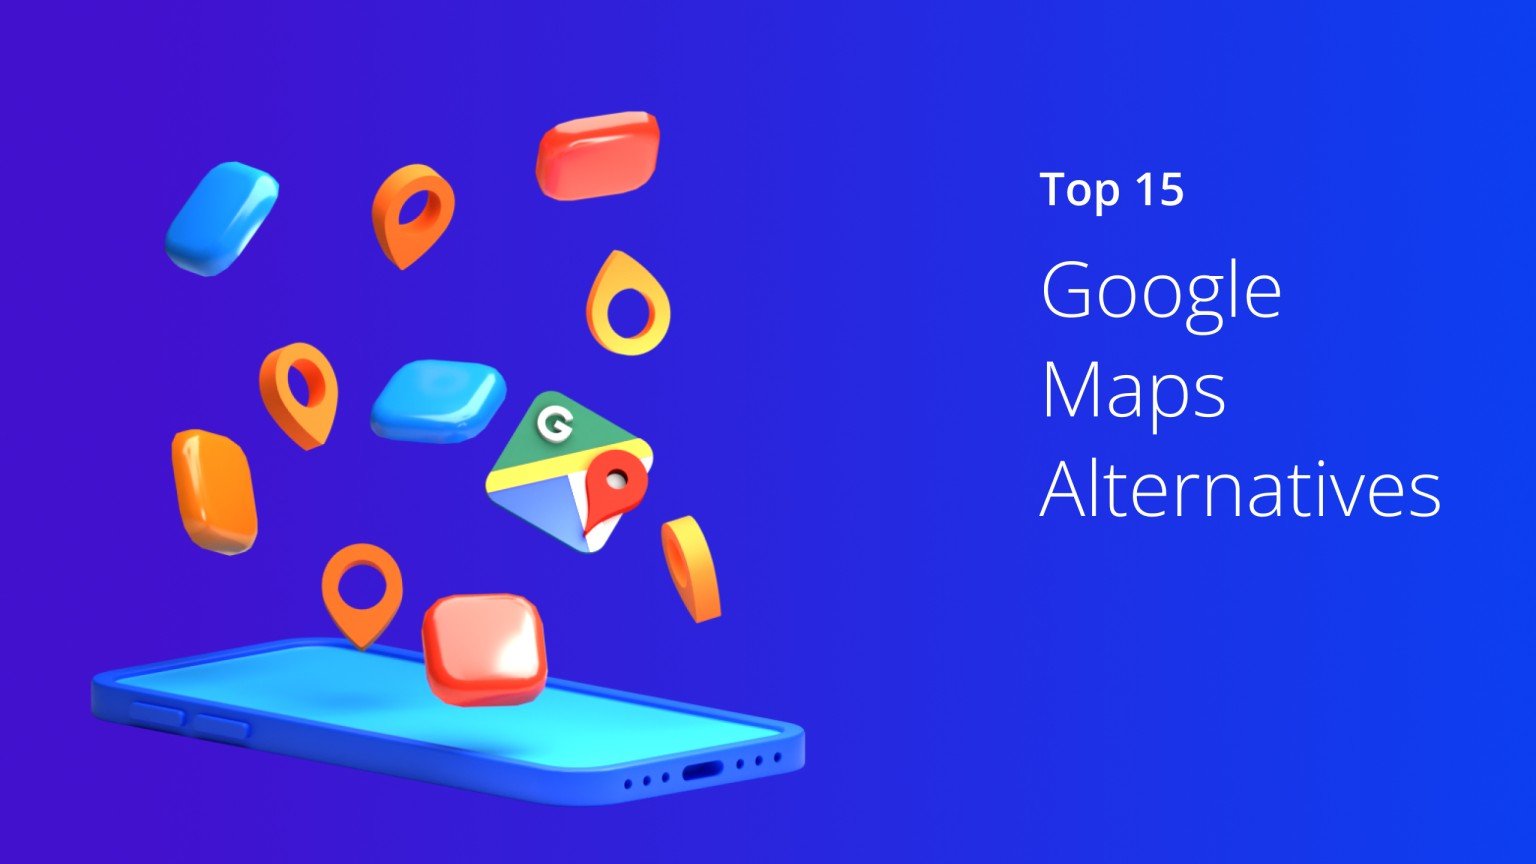 F70197c5 Top 15 Google Maps Alternatives 1536x864 